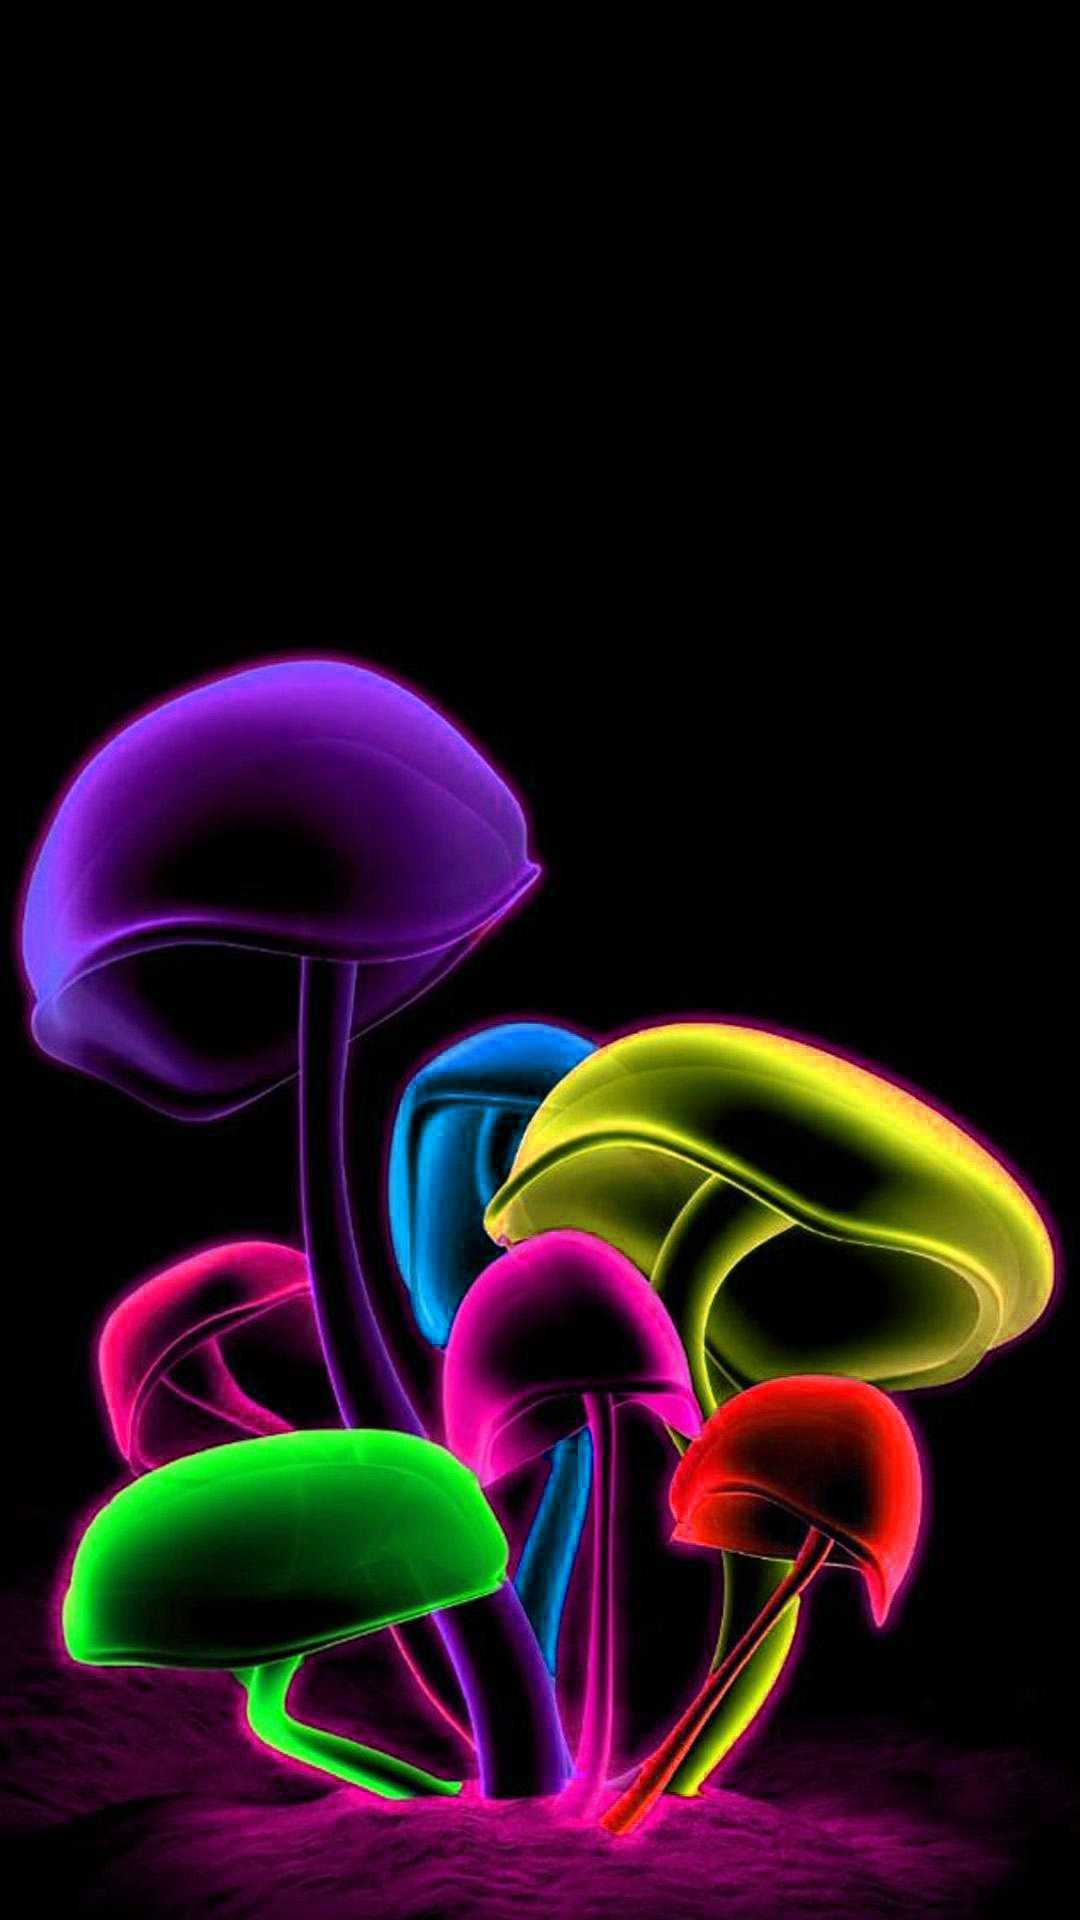 Mushroom iphone Wallpaper - NawPic